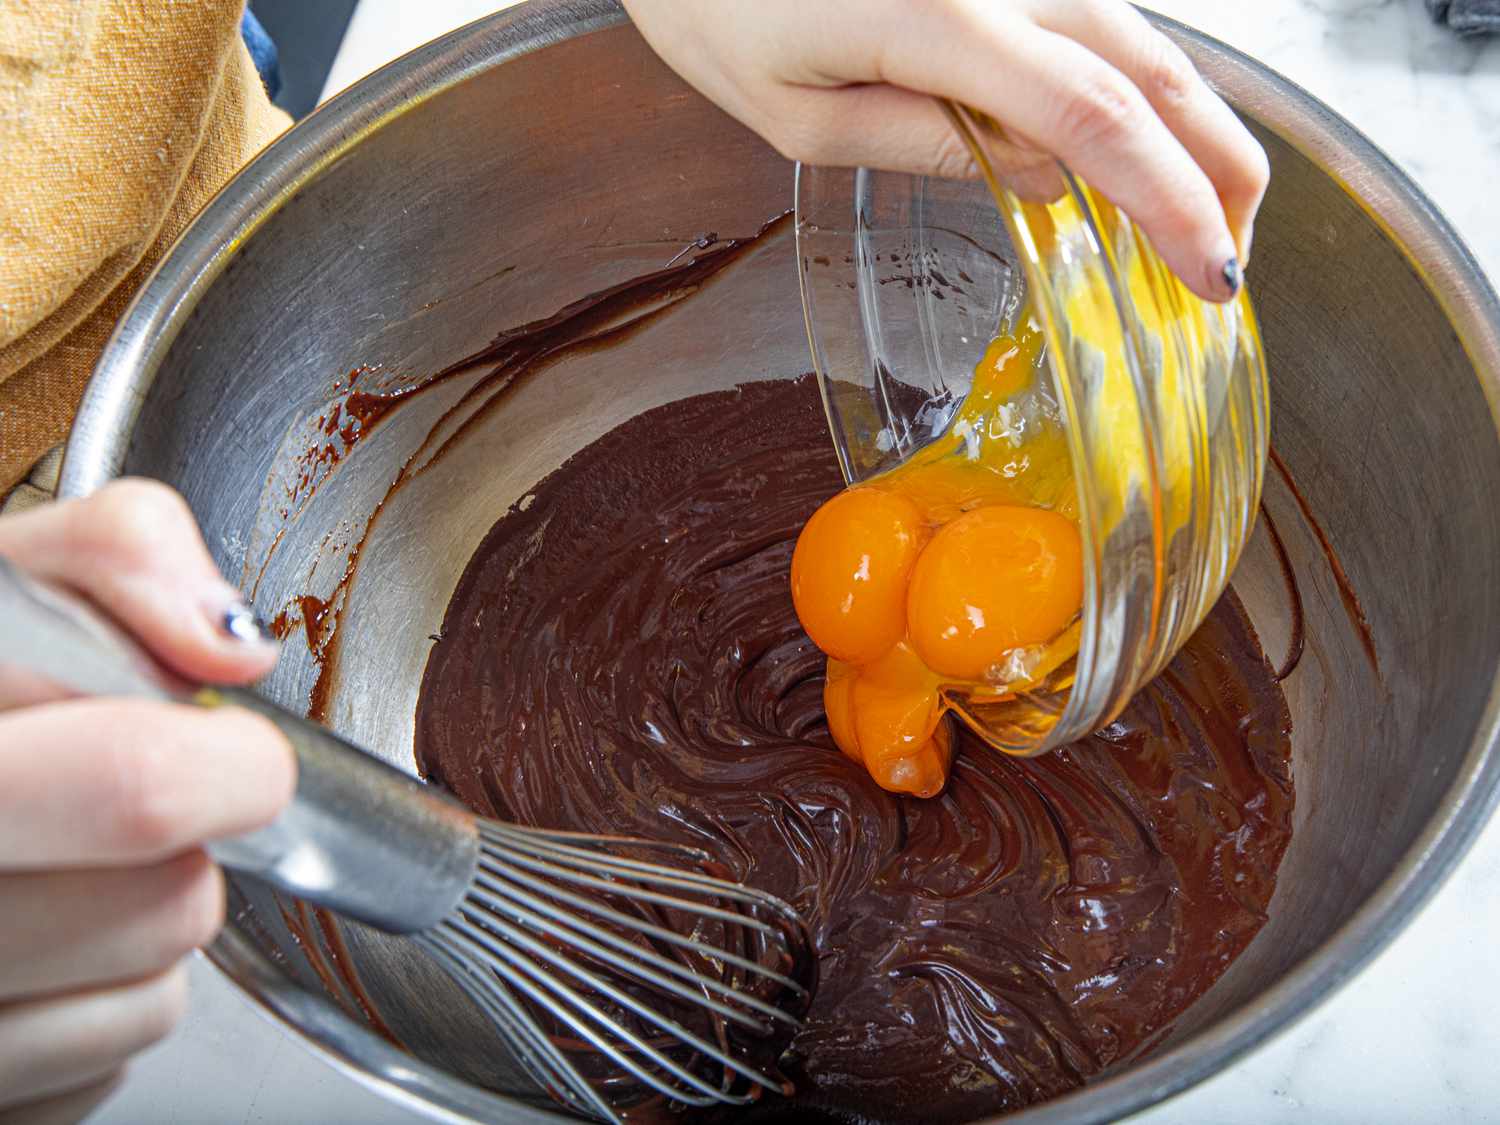 Adding eggs to chocolate mixture